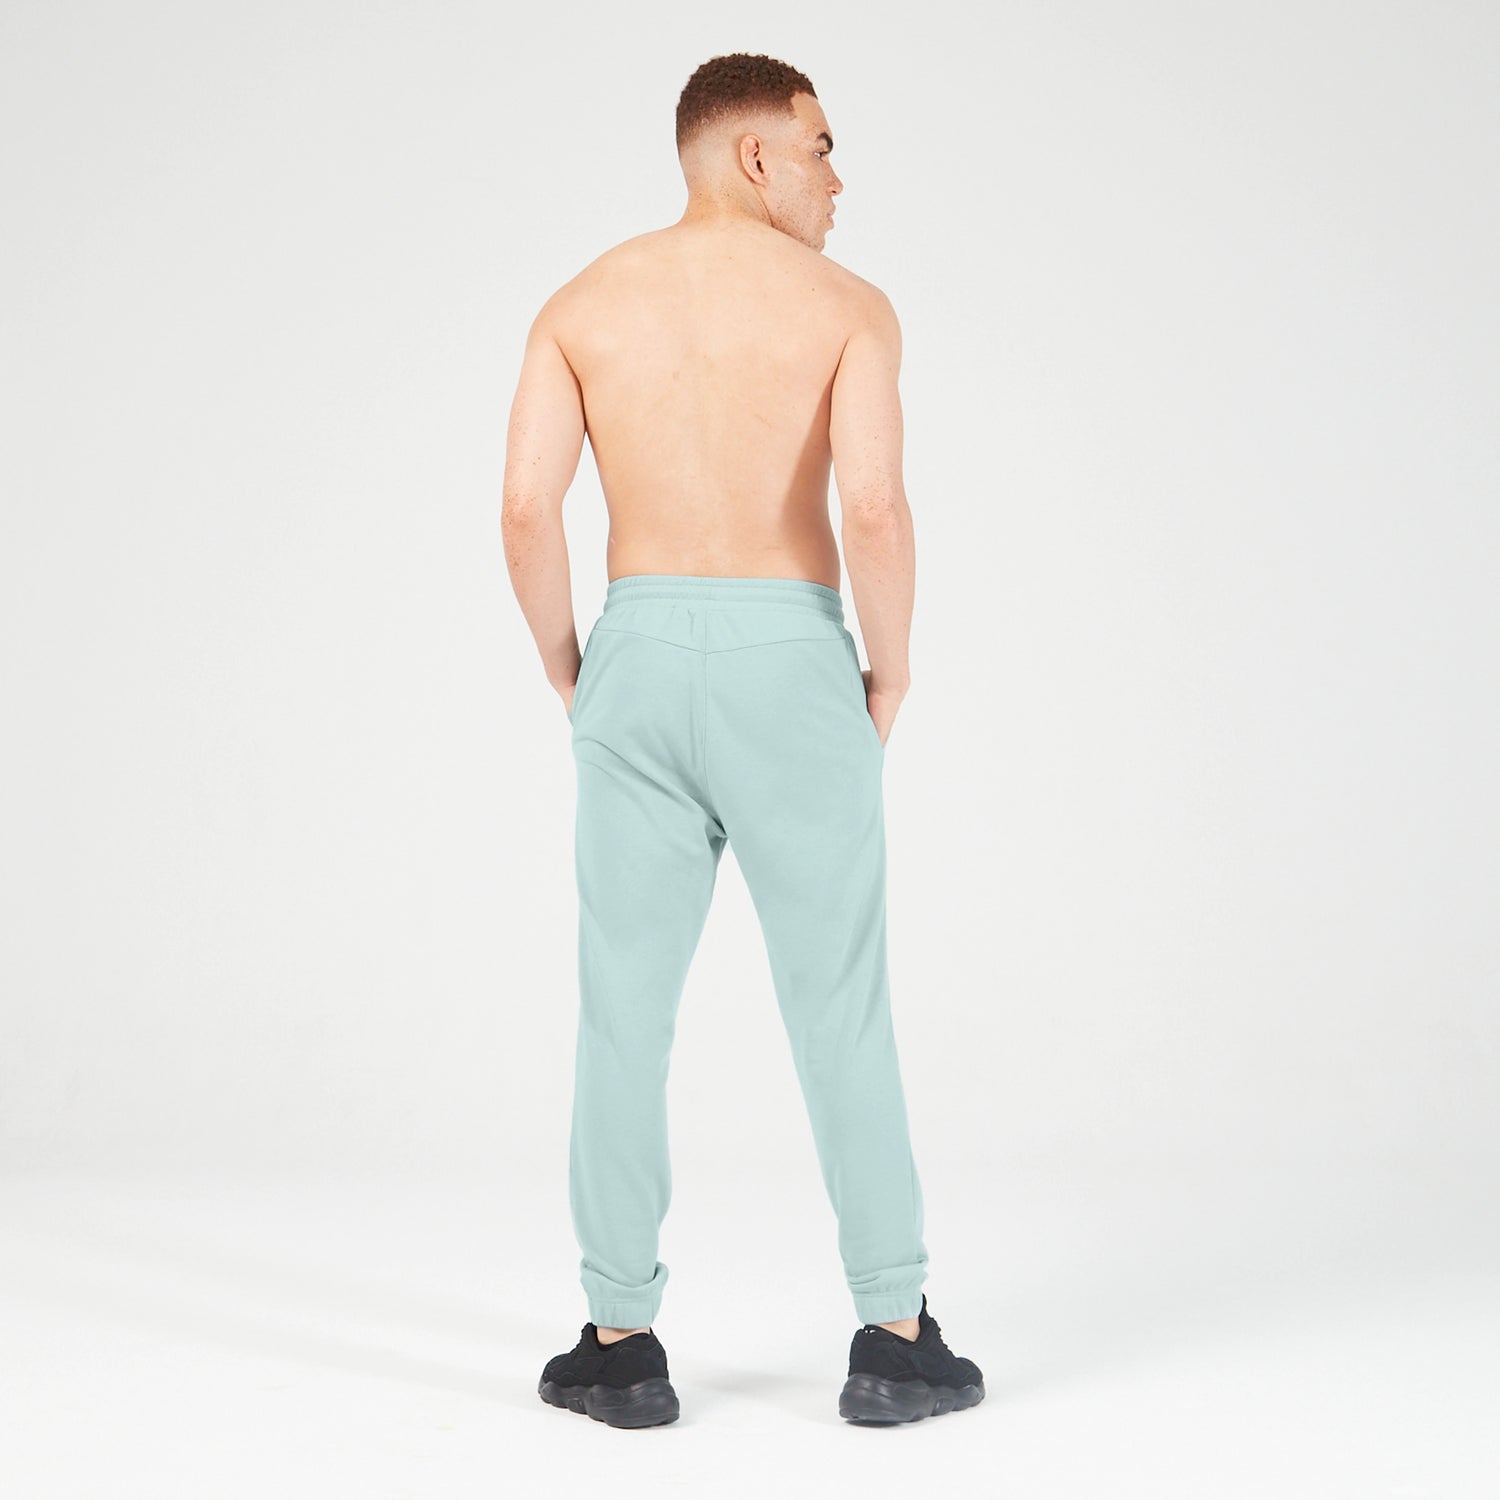 squatwolf-gym-wear-essential-jogger-pant-gray-mist-workout-pants-for-men